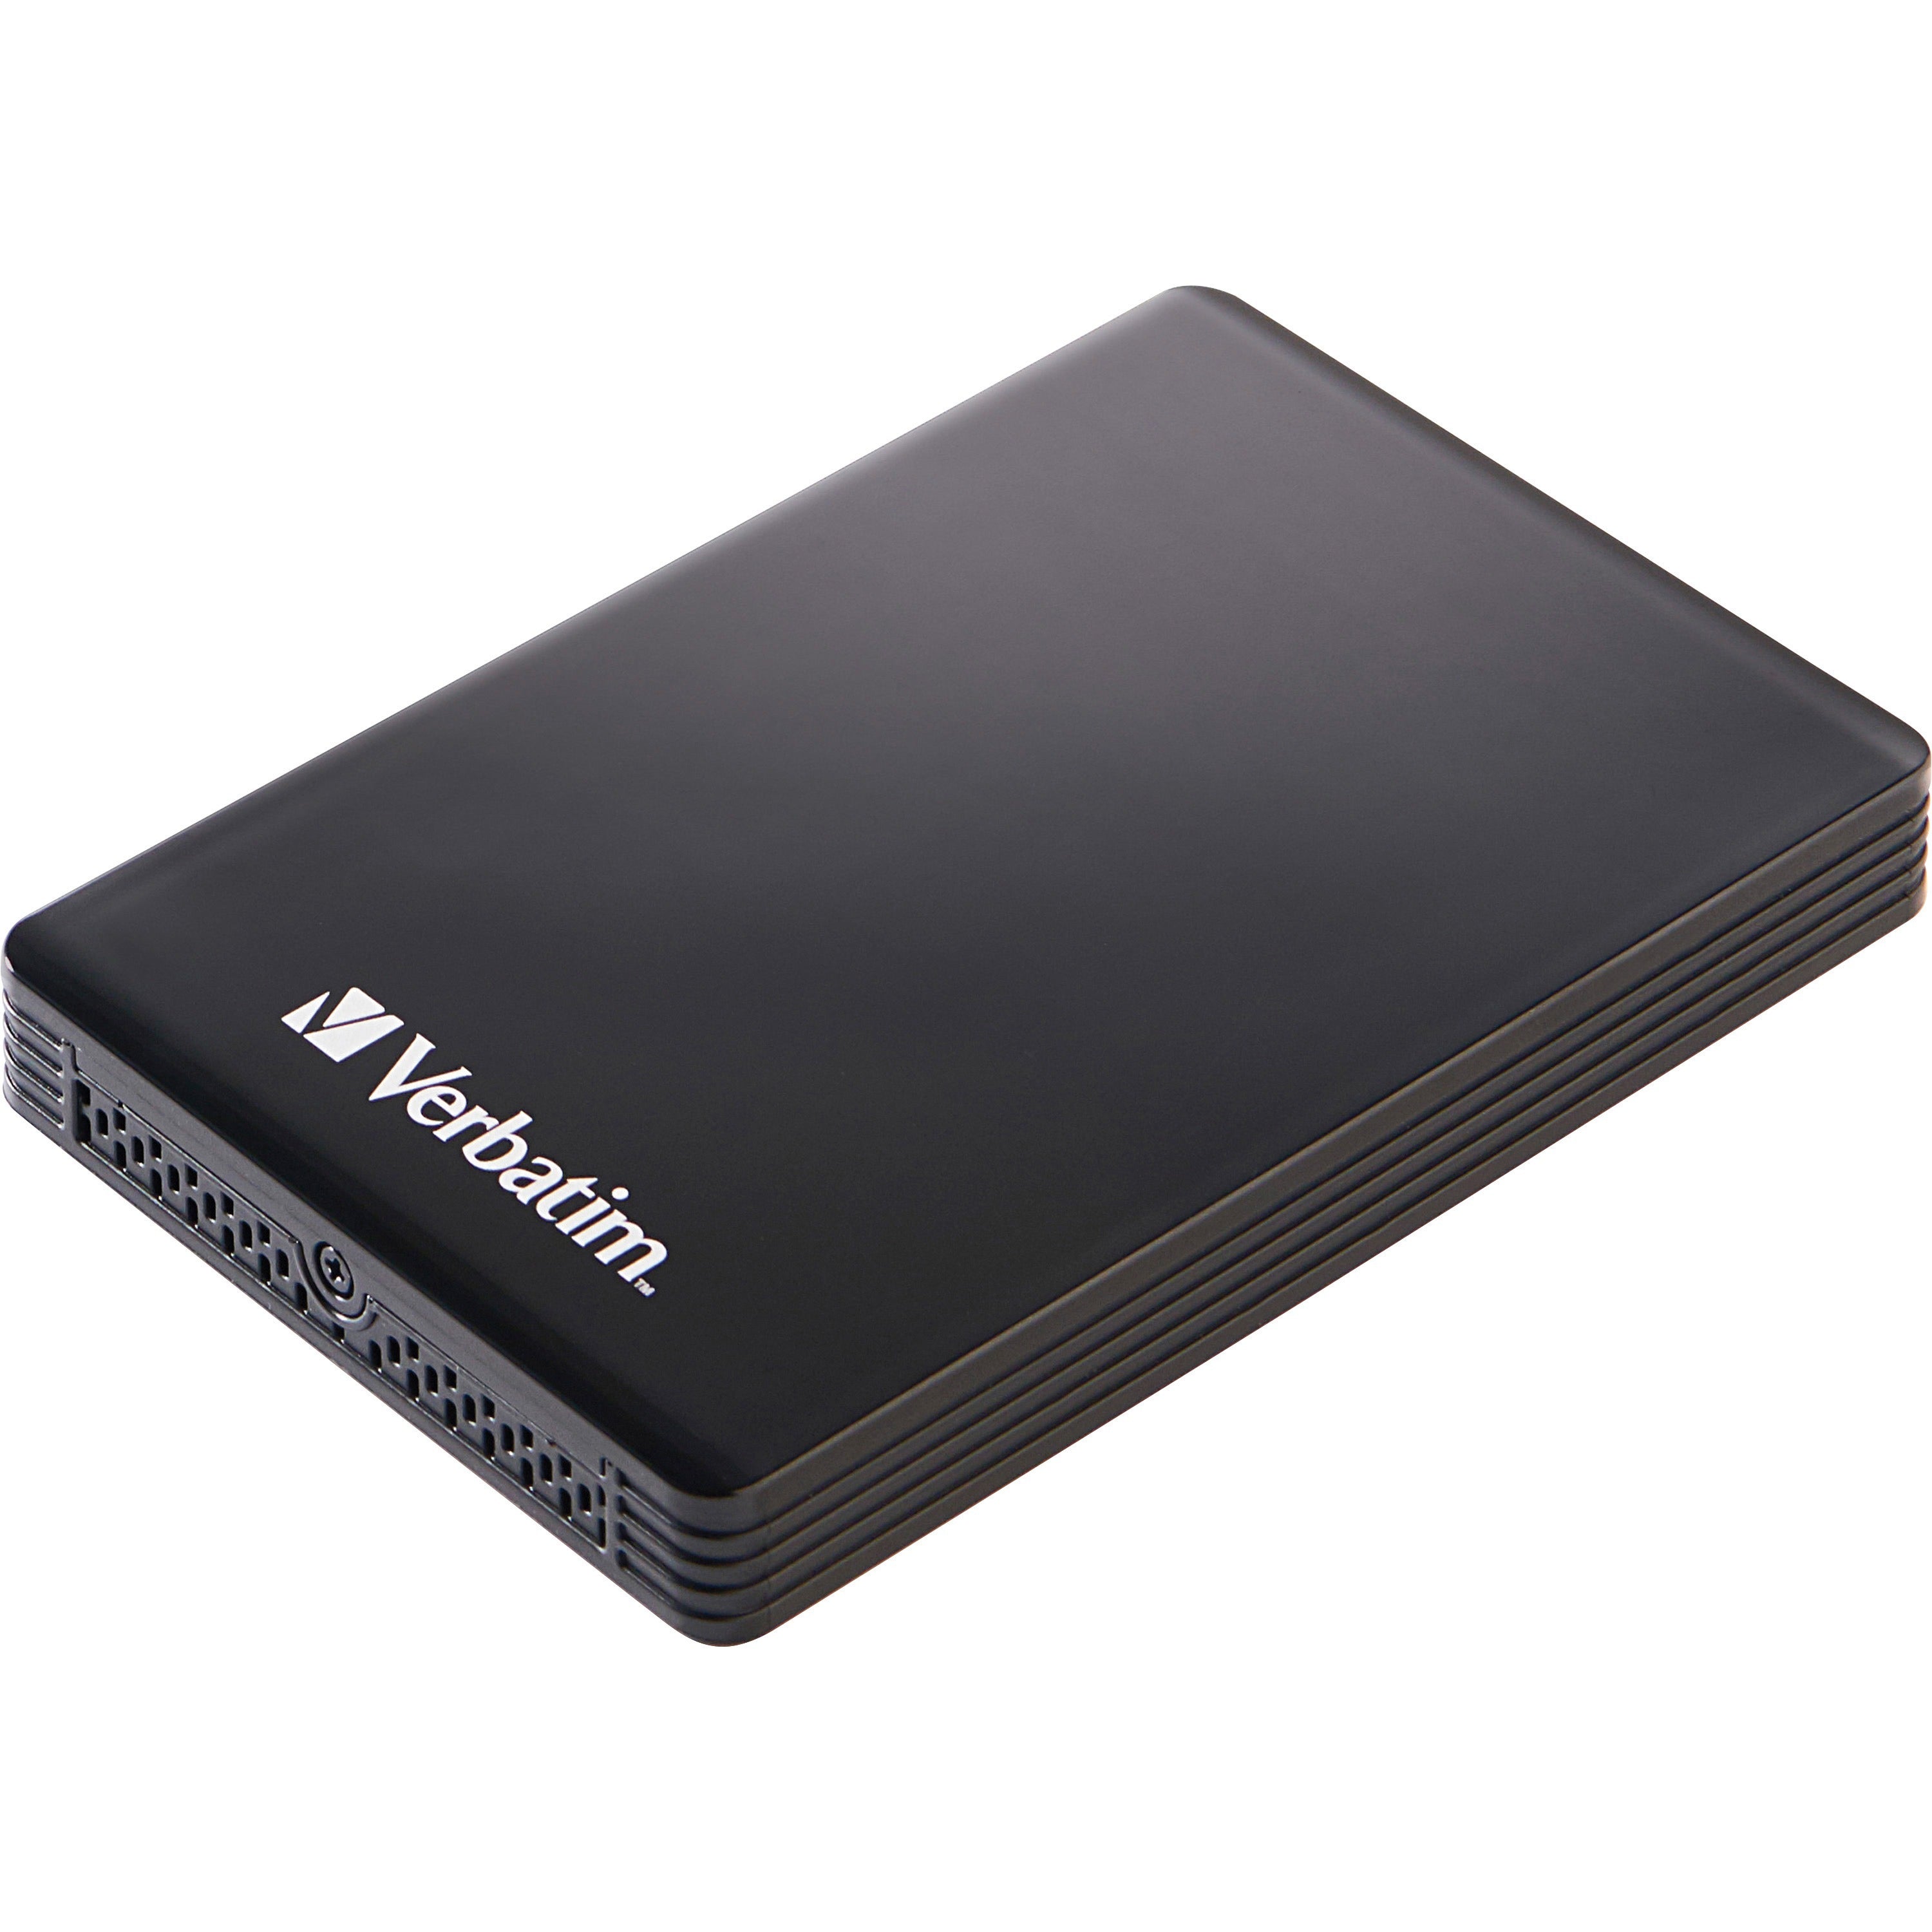 verbatim-128gb-vx460-external-ssd-usb-31-gen-1-black-notebook-device-supported-usb-31-gen-1-2-year-warranty-1-pack_ver70381 - 1